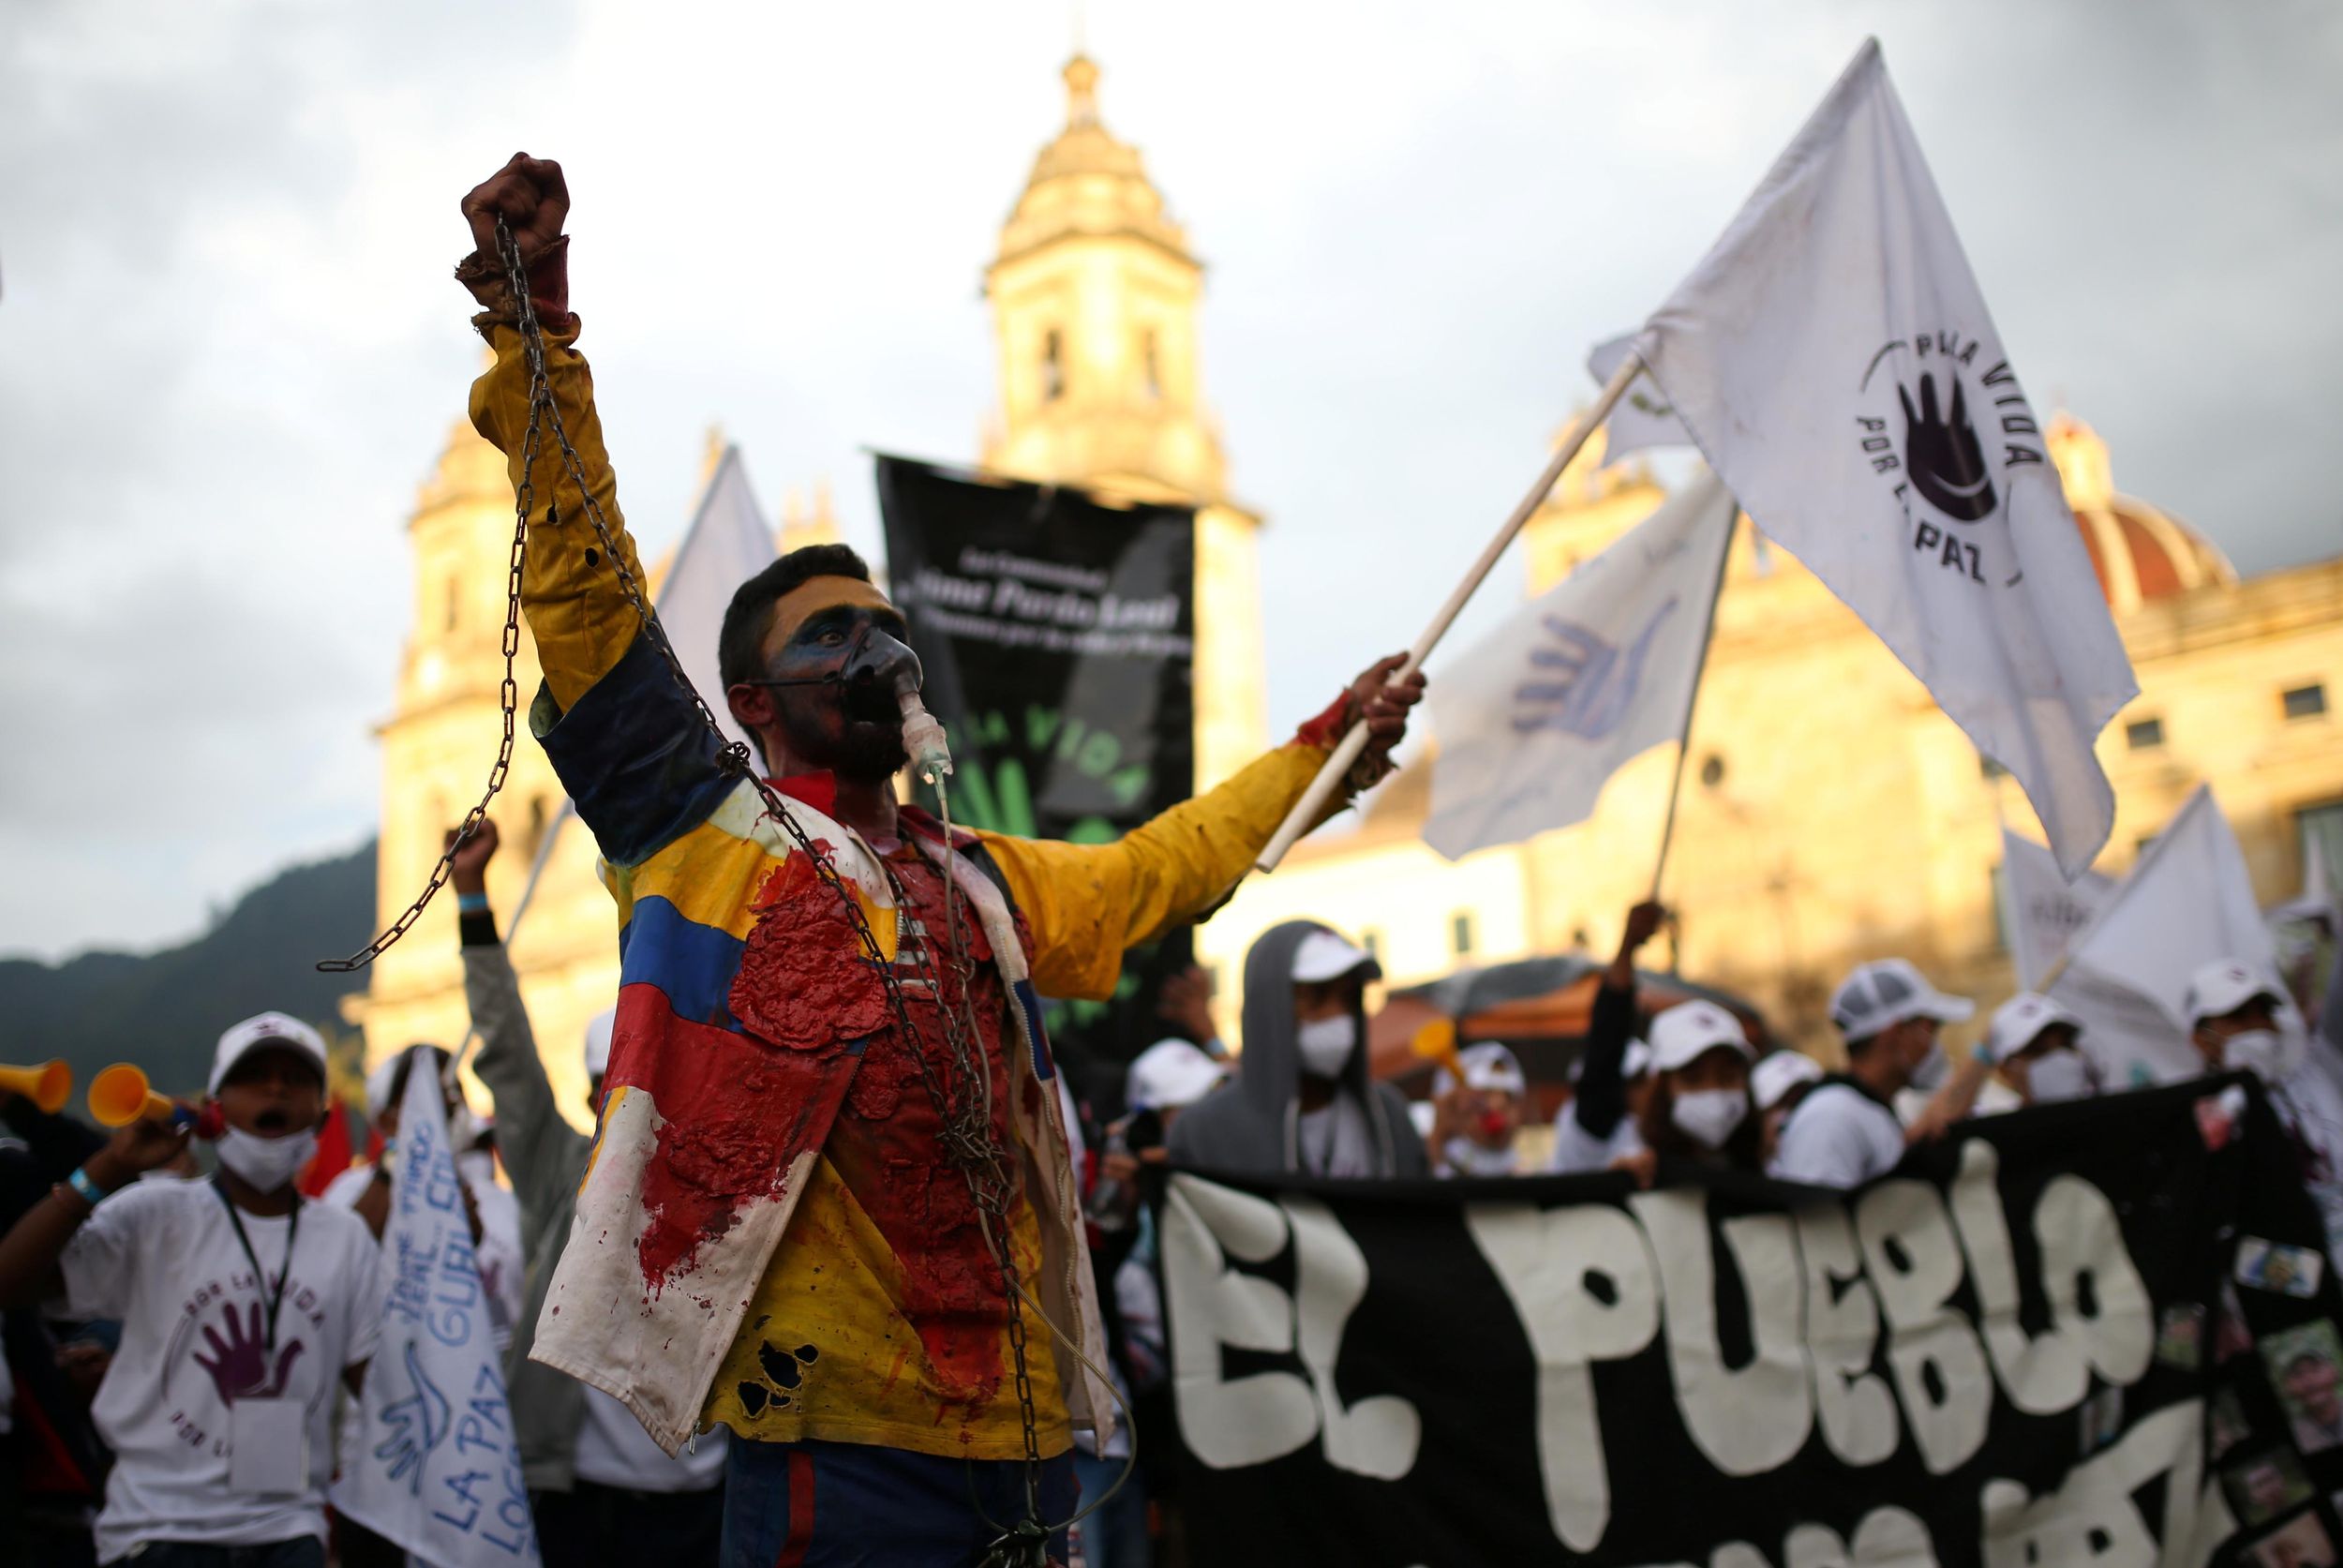 Former FARC guerrillas protest in Bogota, Colombia. Reuters